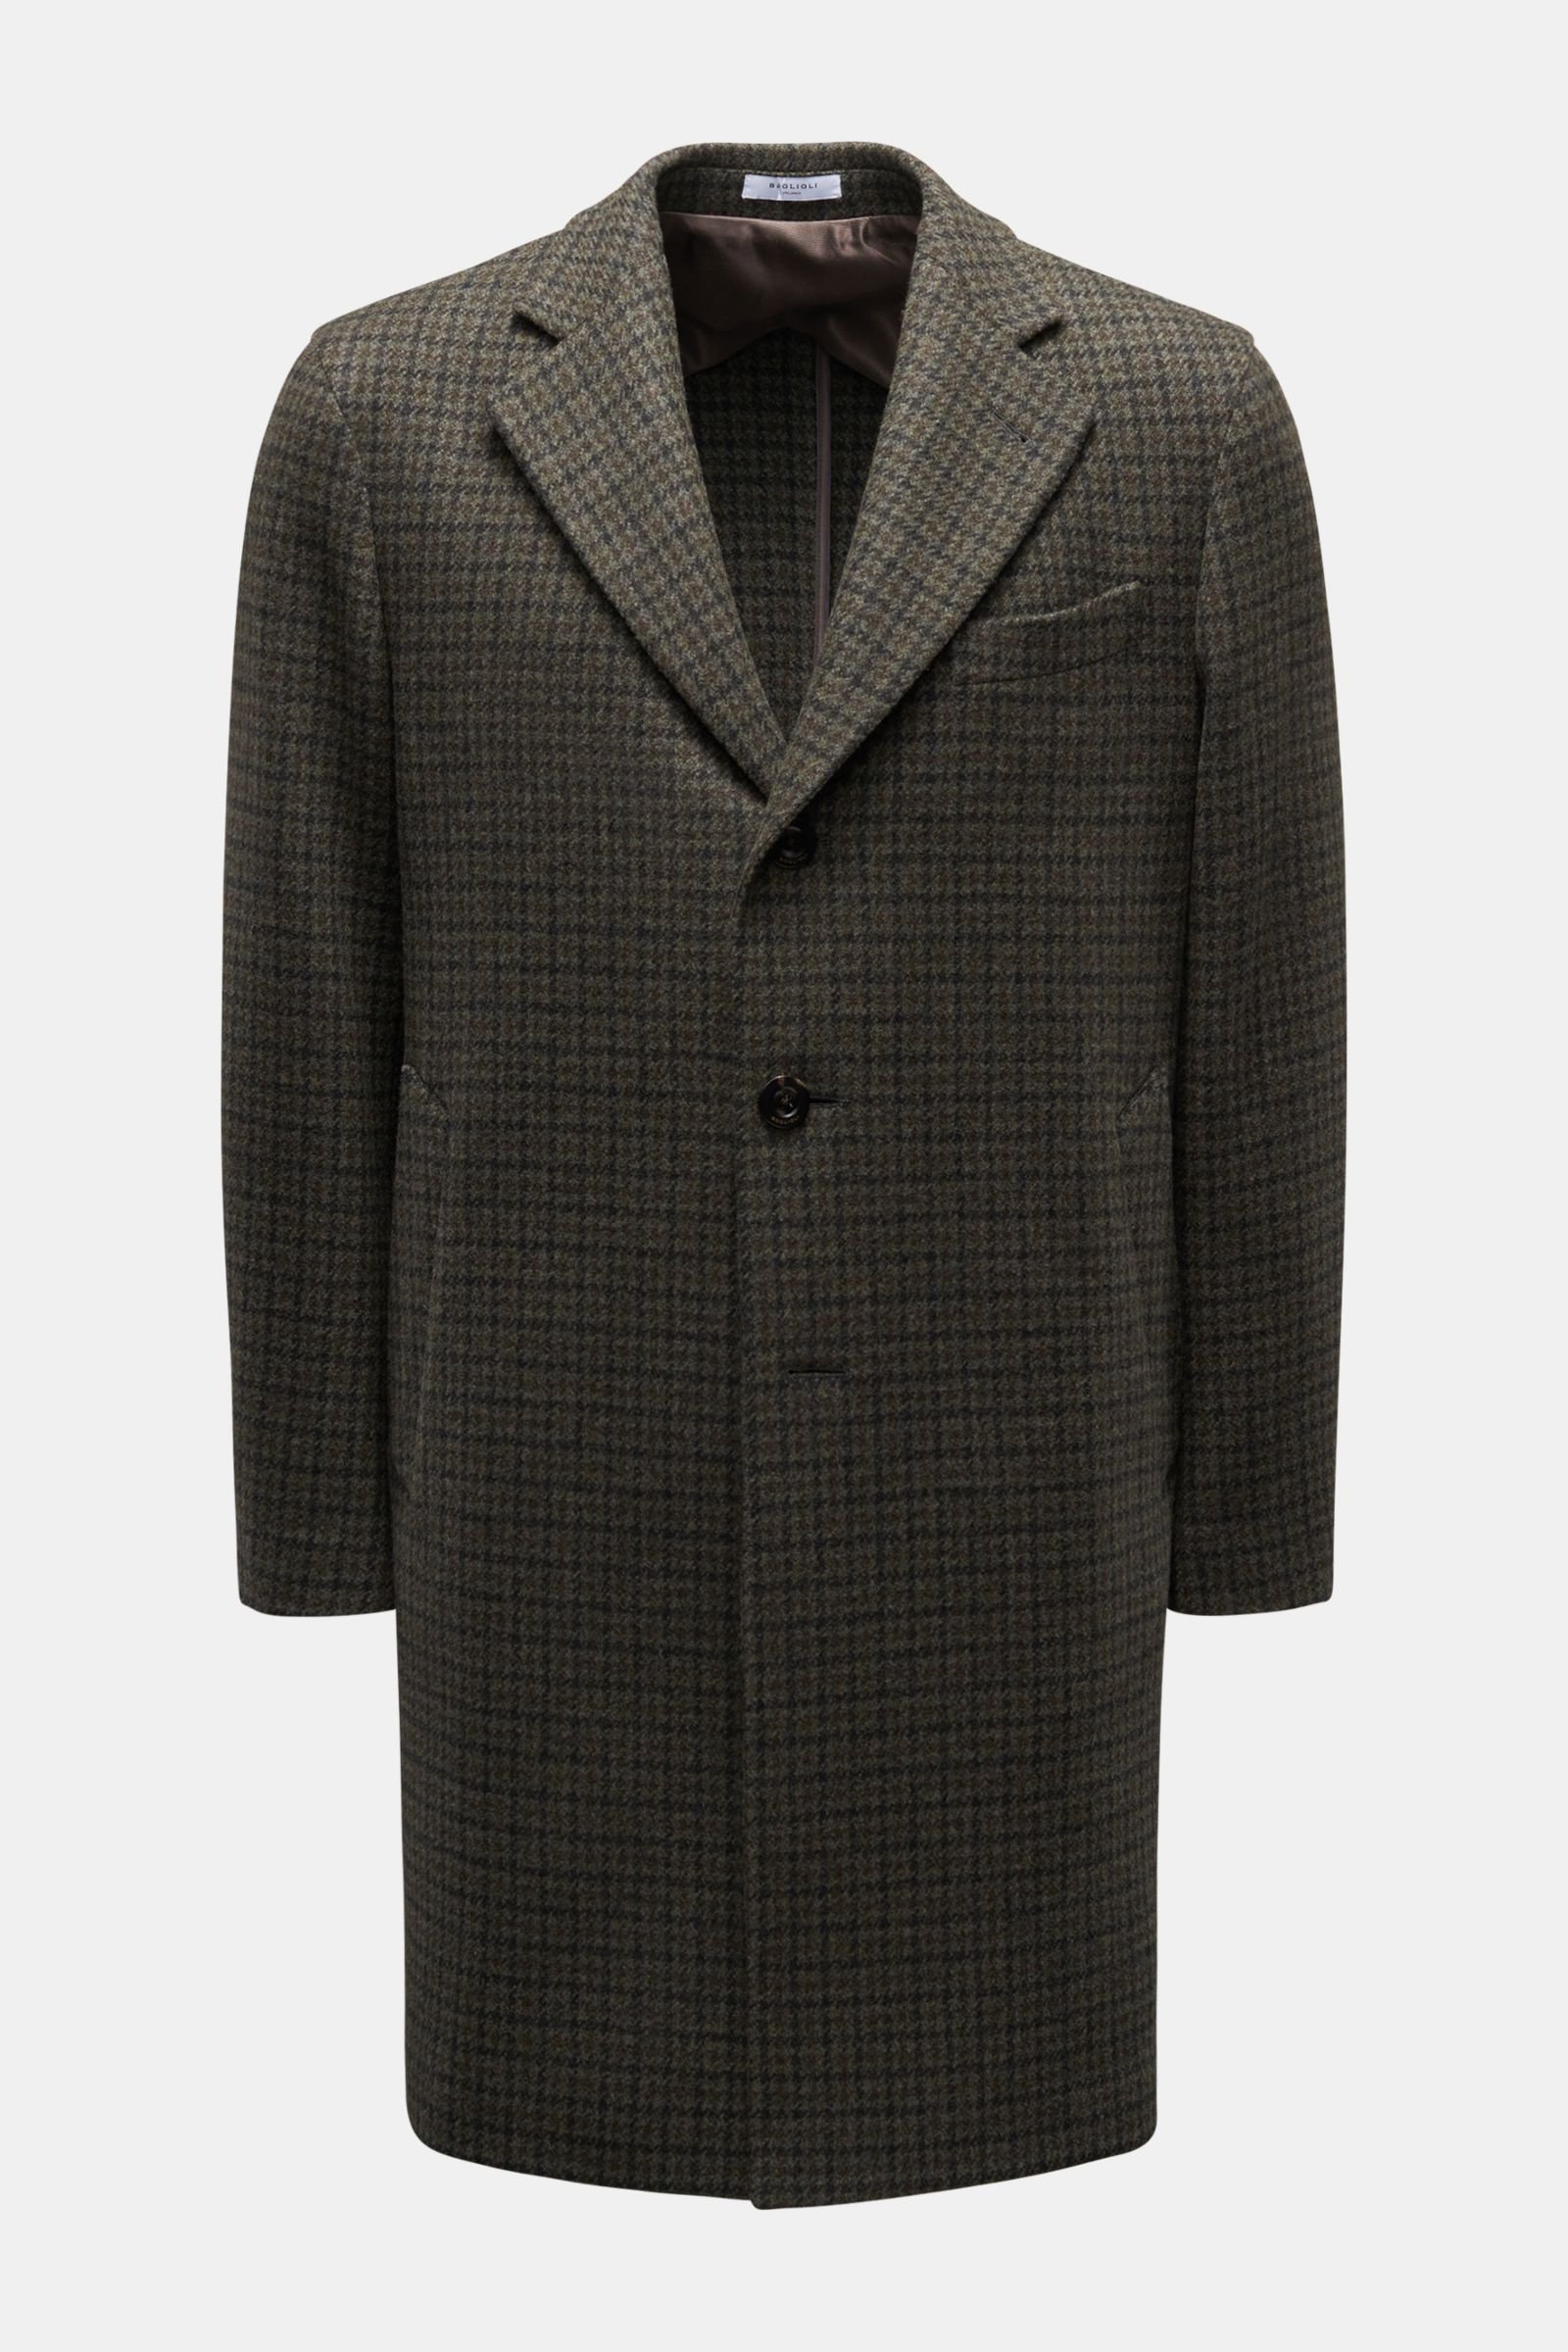 Coat grey-green/black checked